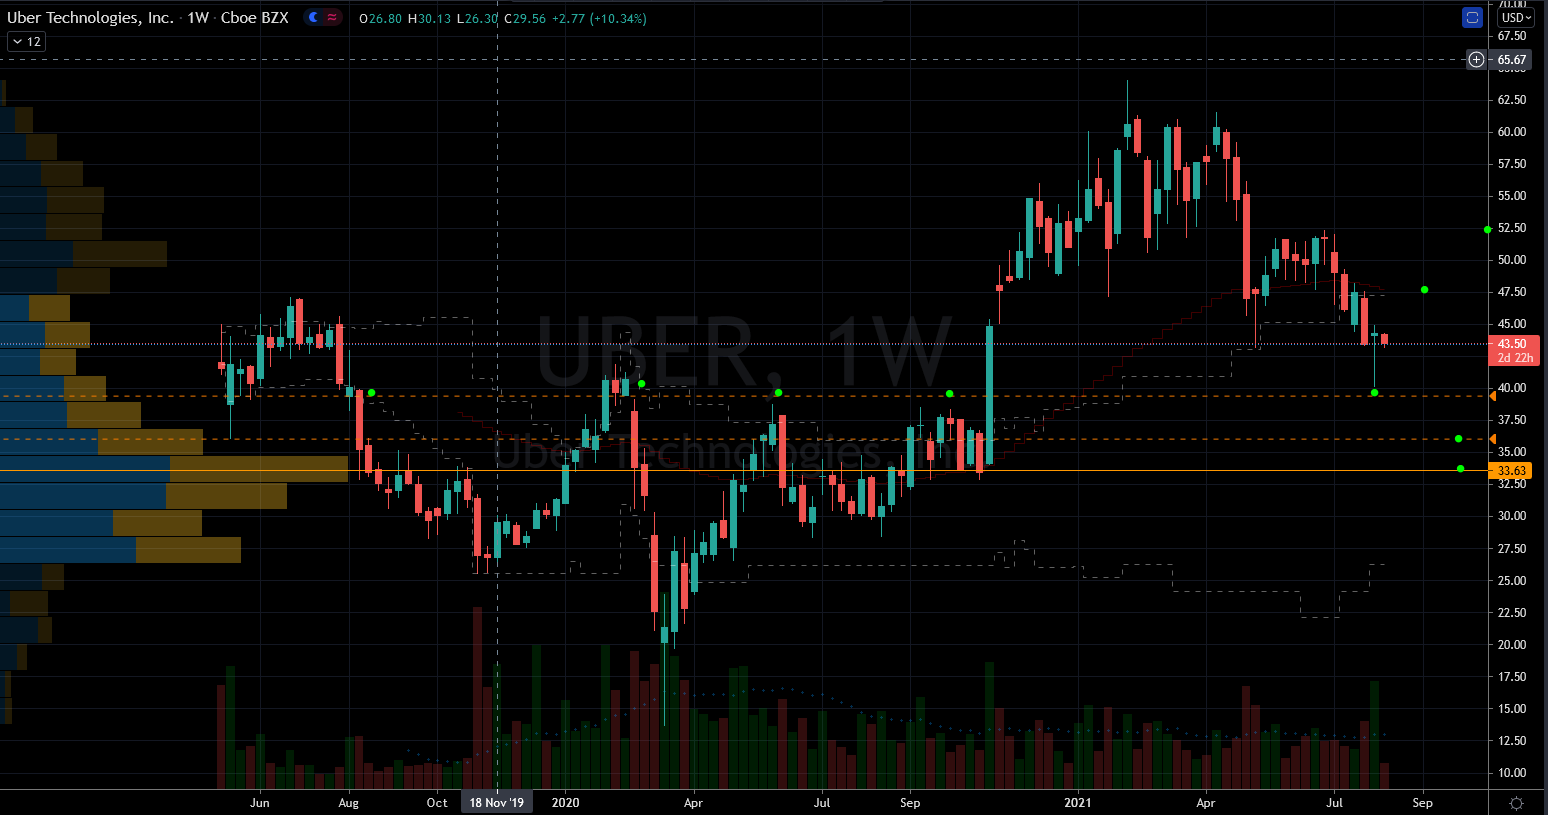 UBER Stock Chart Showing Balance